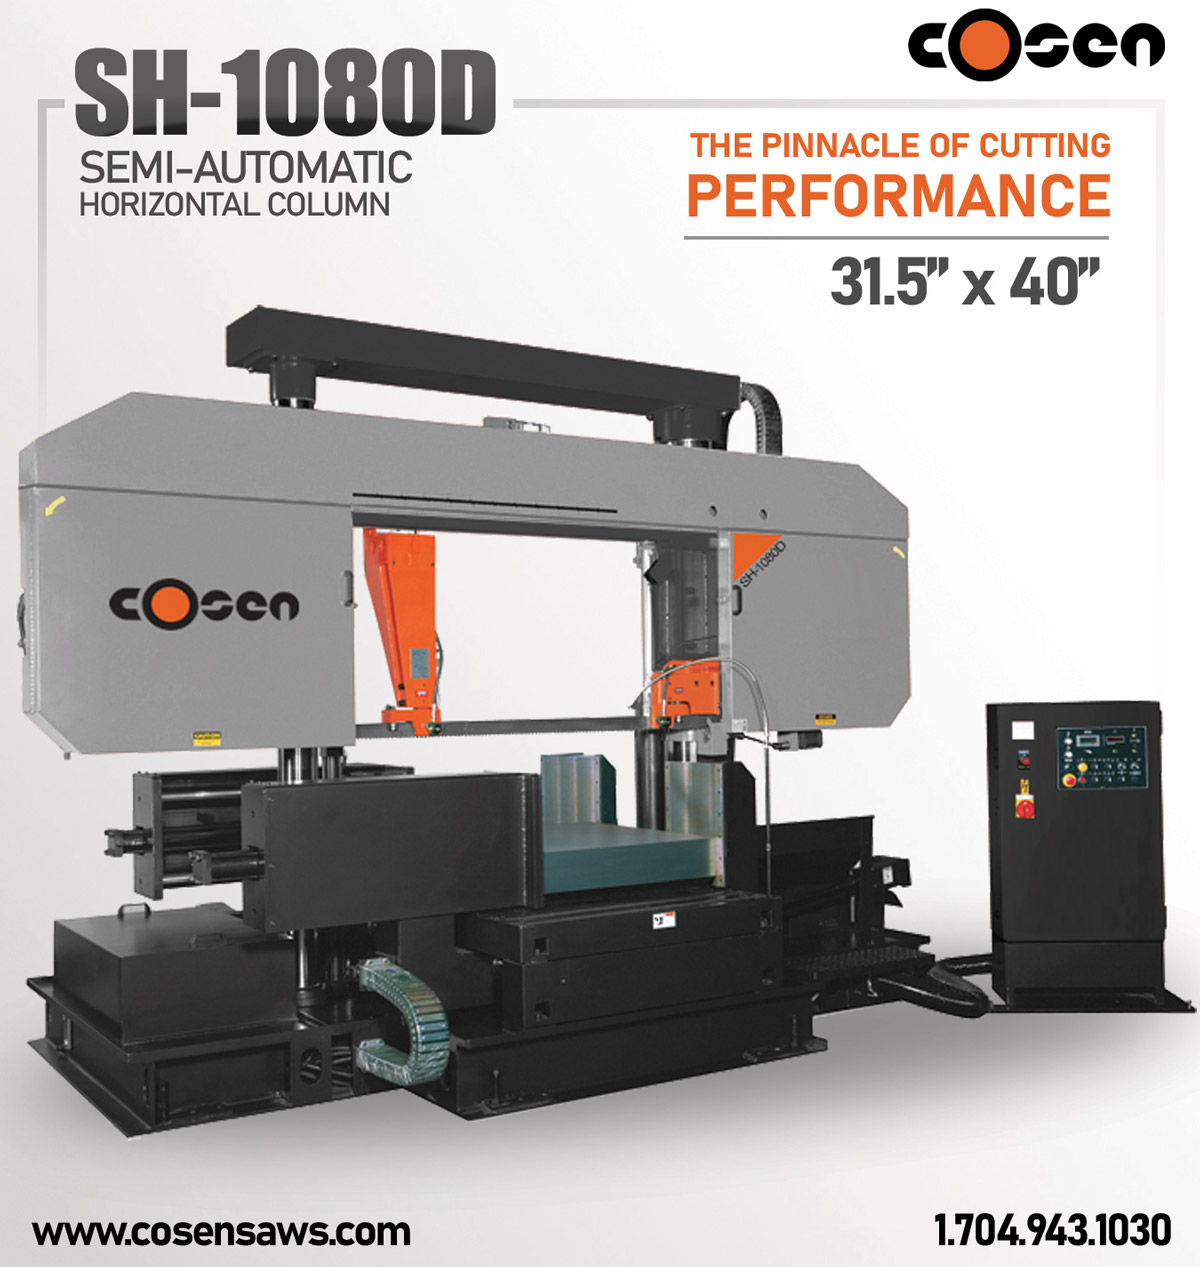 Cosen SH-1080D Semi-Automatic Horizontal Column advertisement